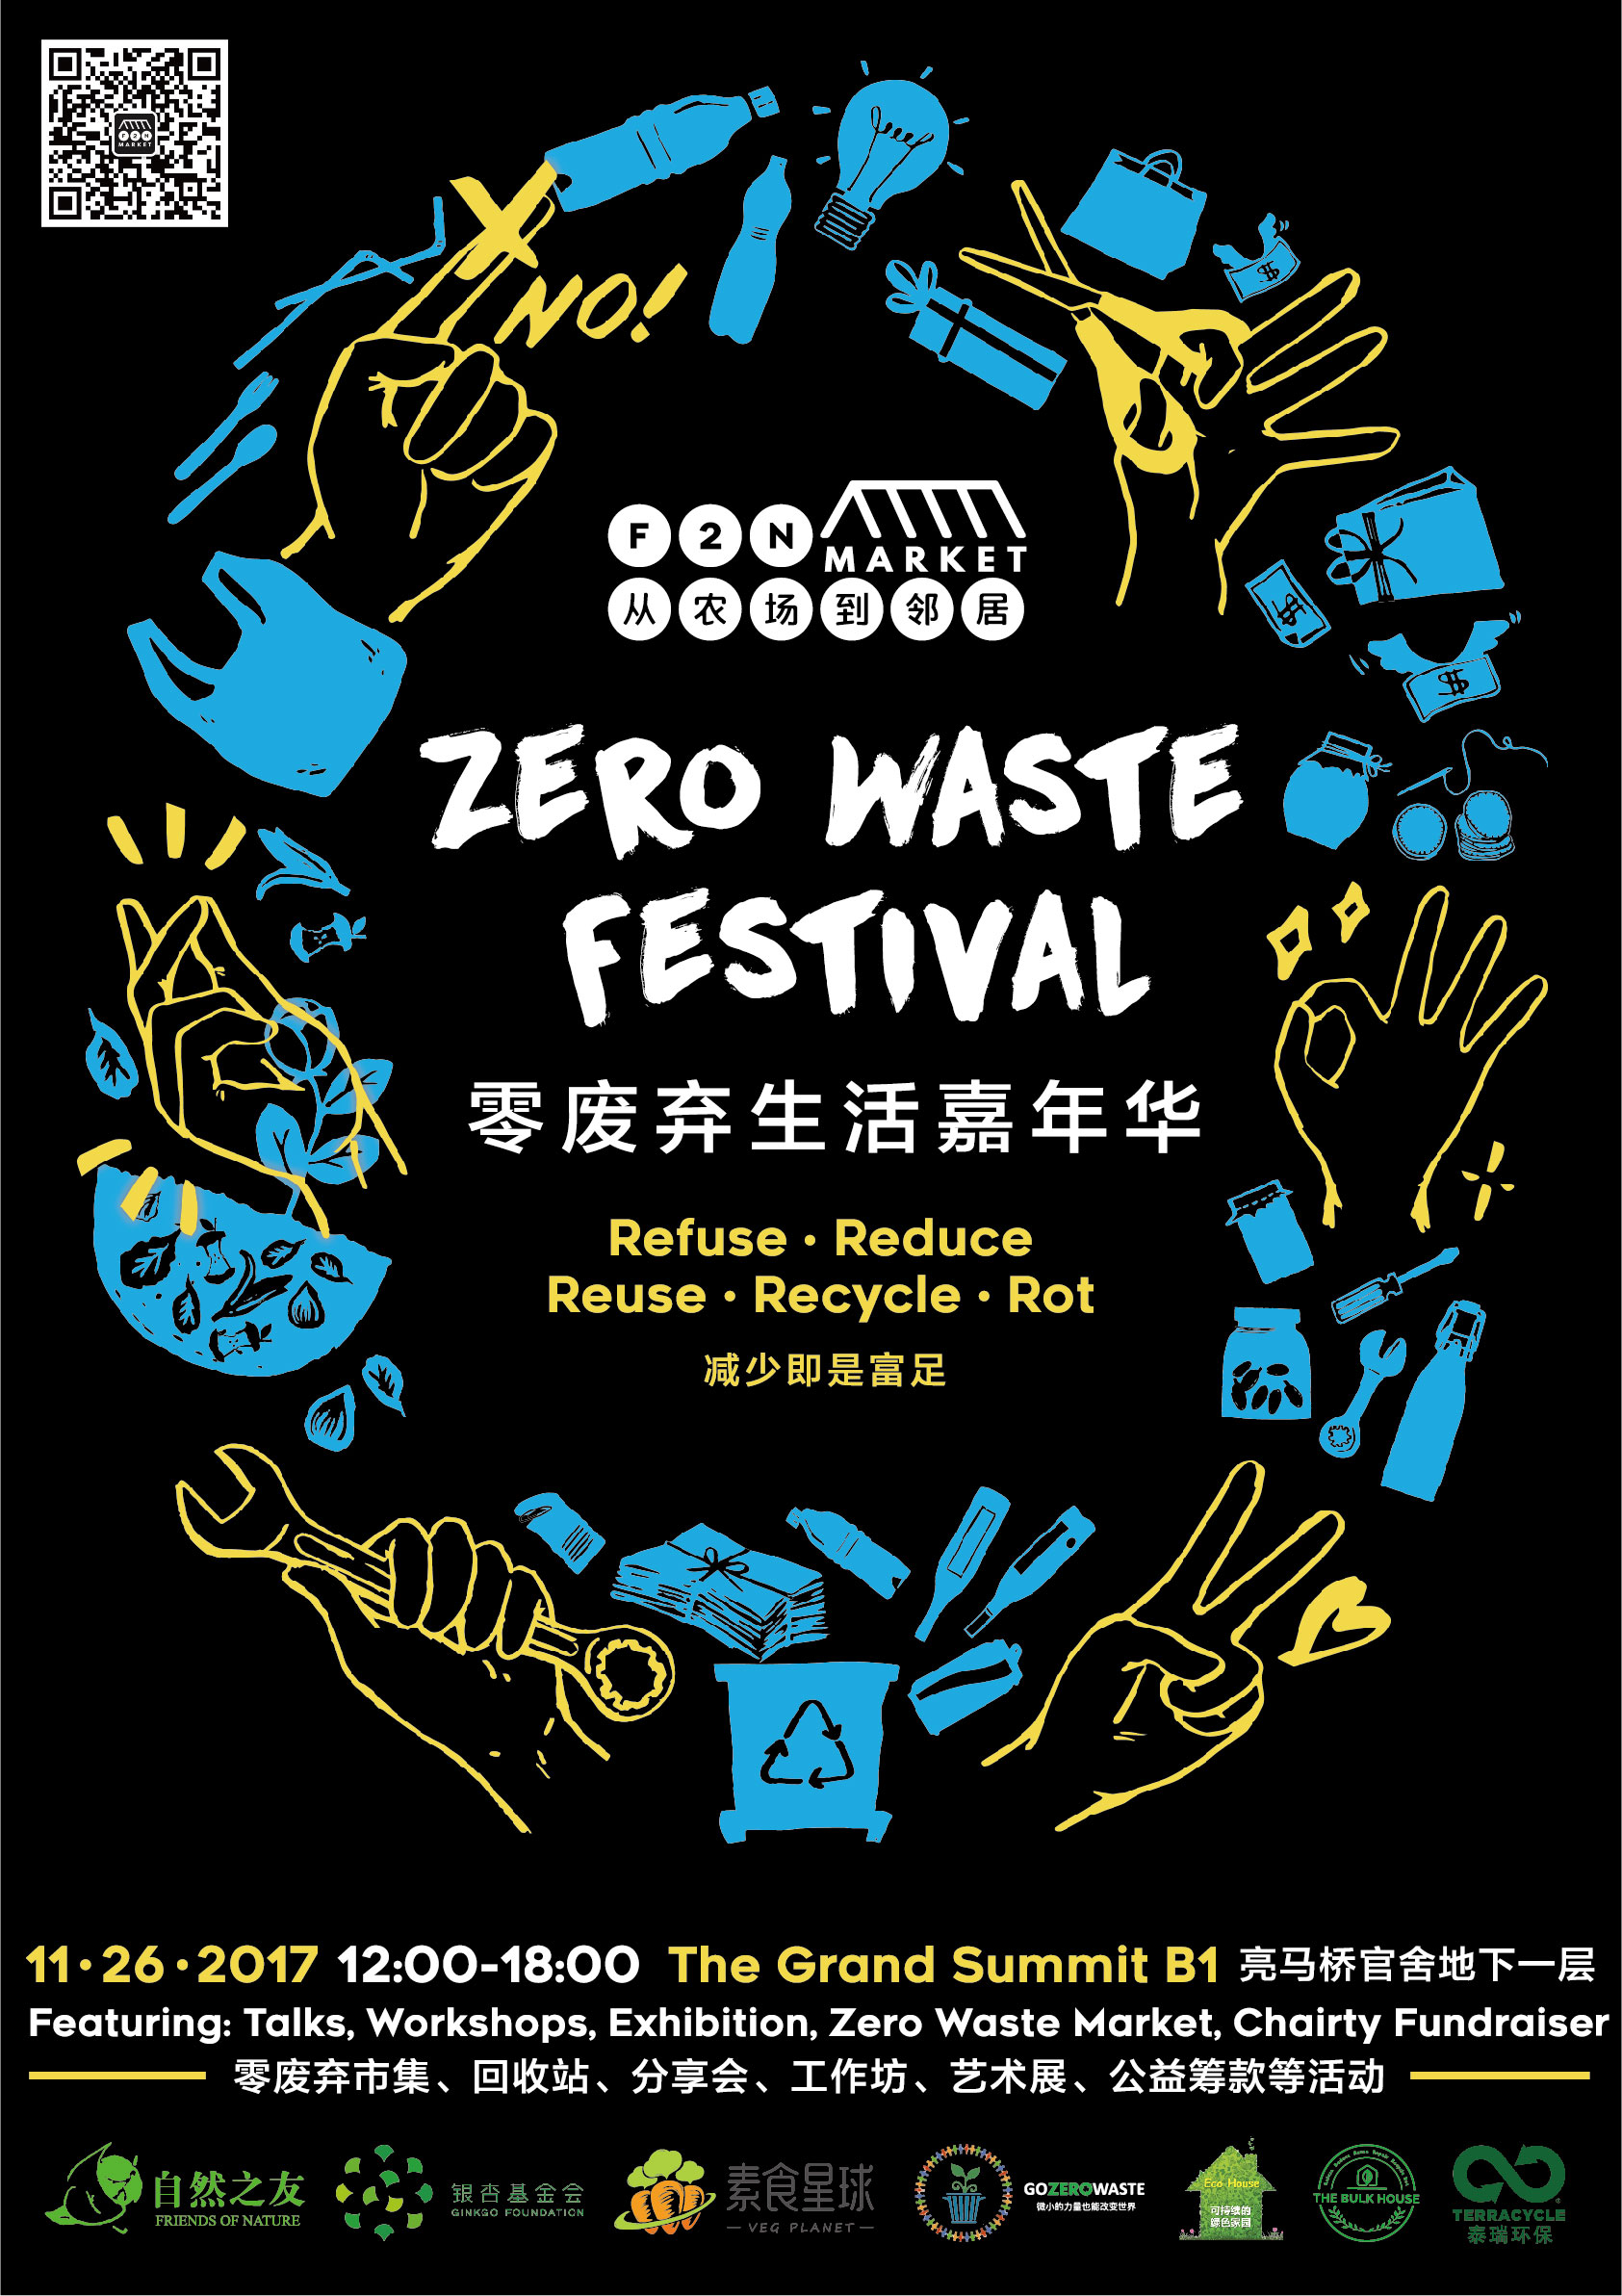 festival 0 waste